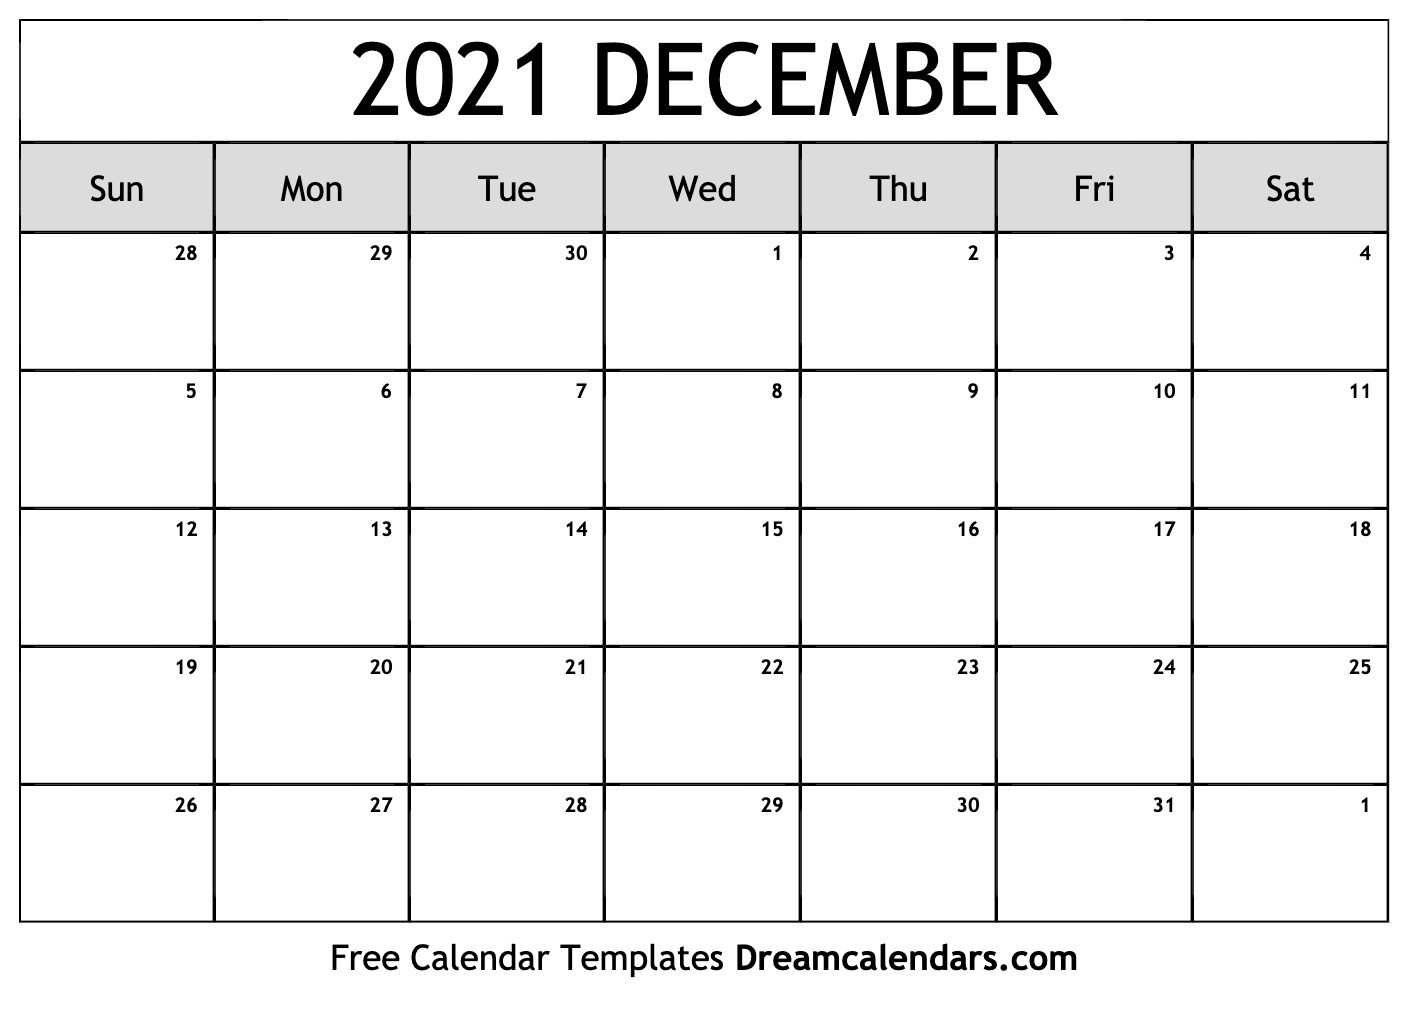 December 2021 Calendar | Free Blank Printable Templates-December 2021 Monthly Calendar Printable Free Word